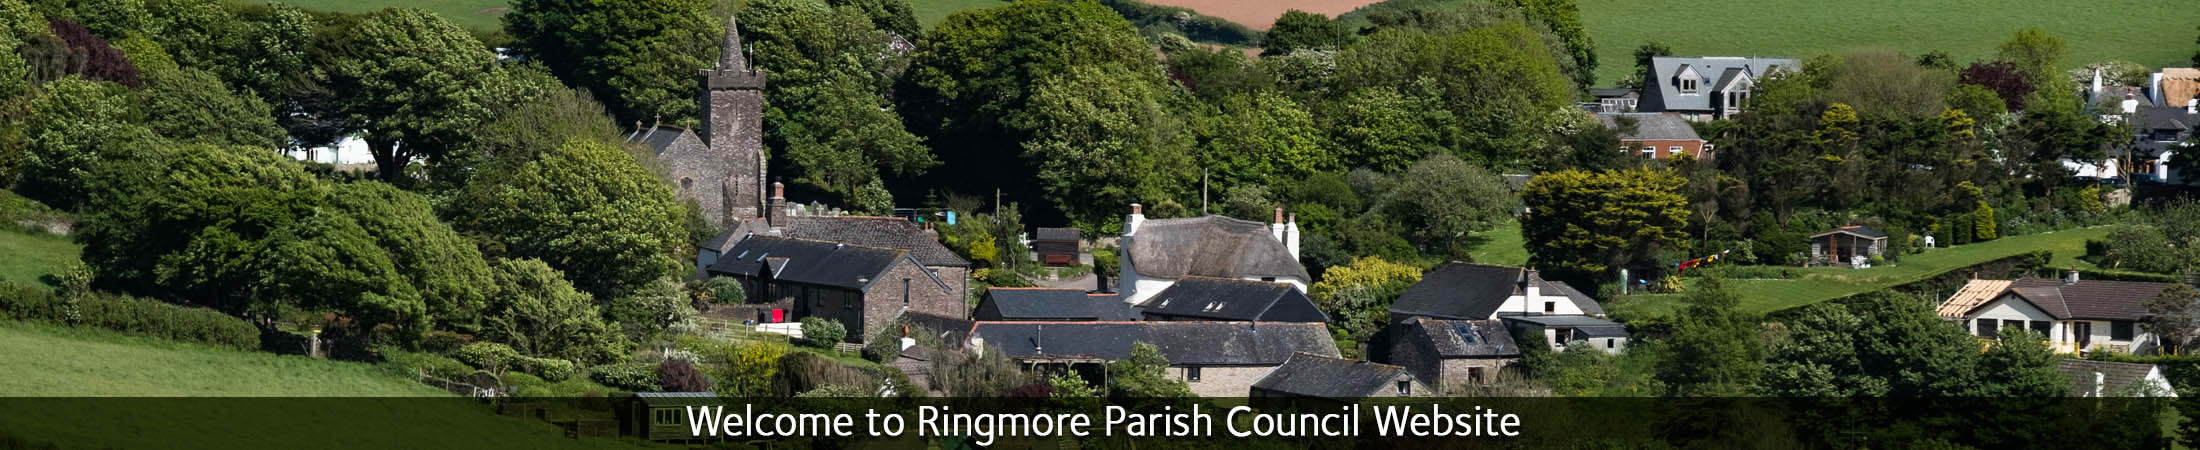 Header Image for Ringmore Parish Council 